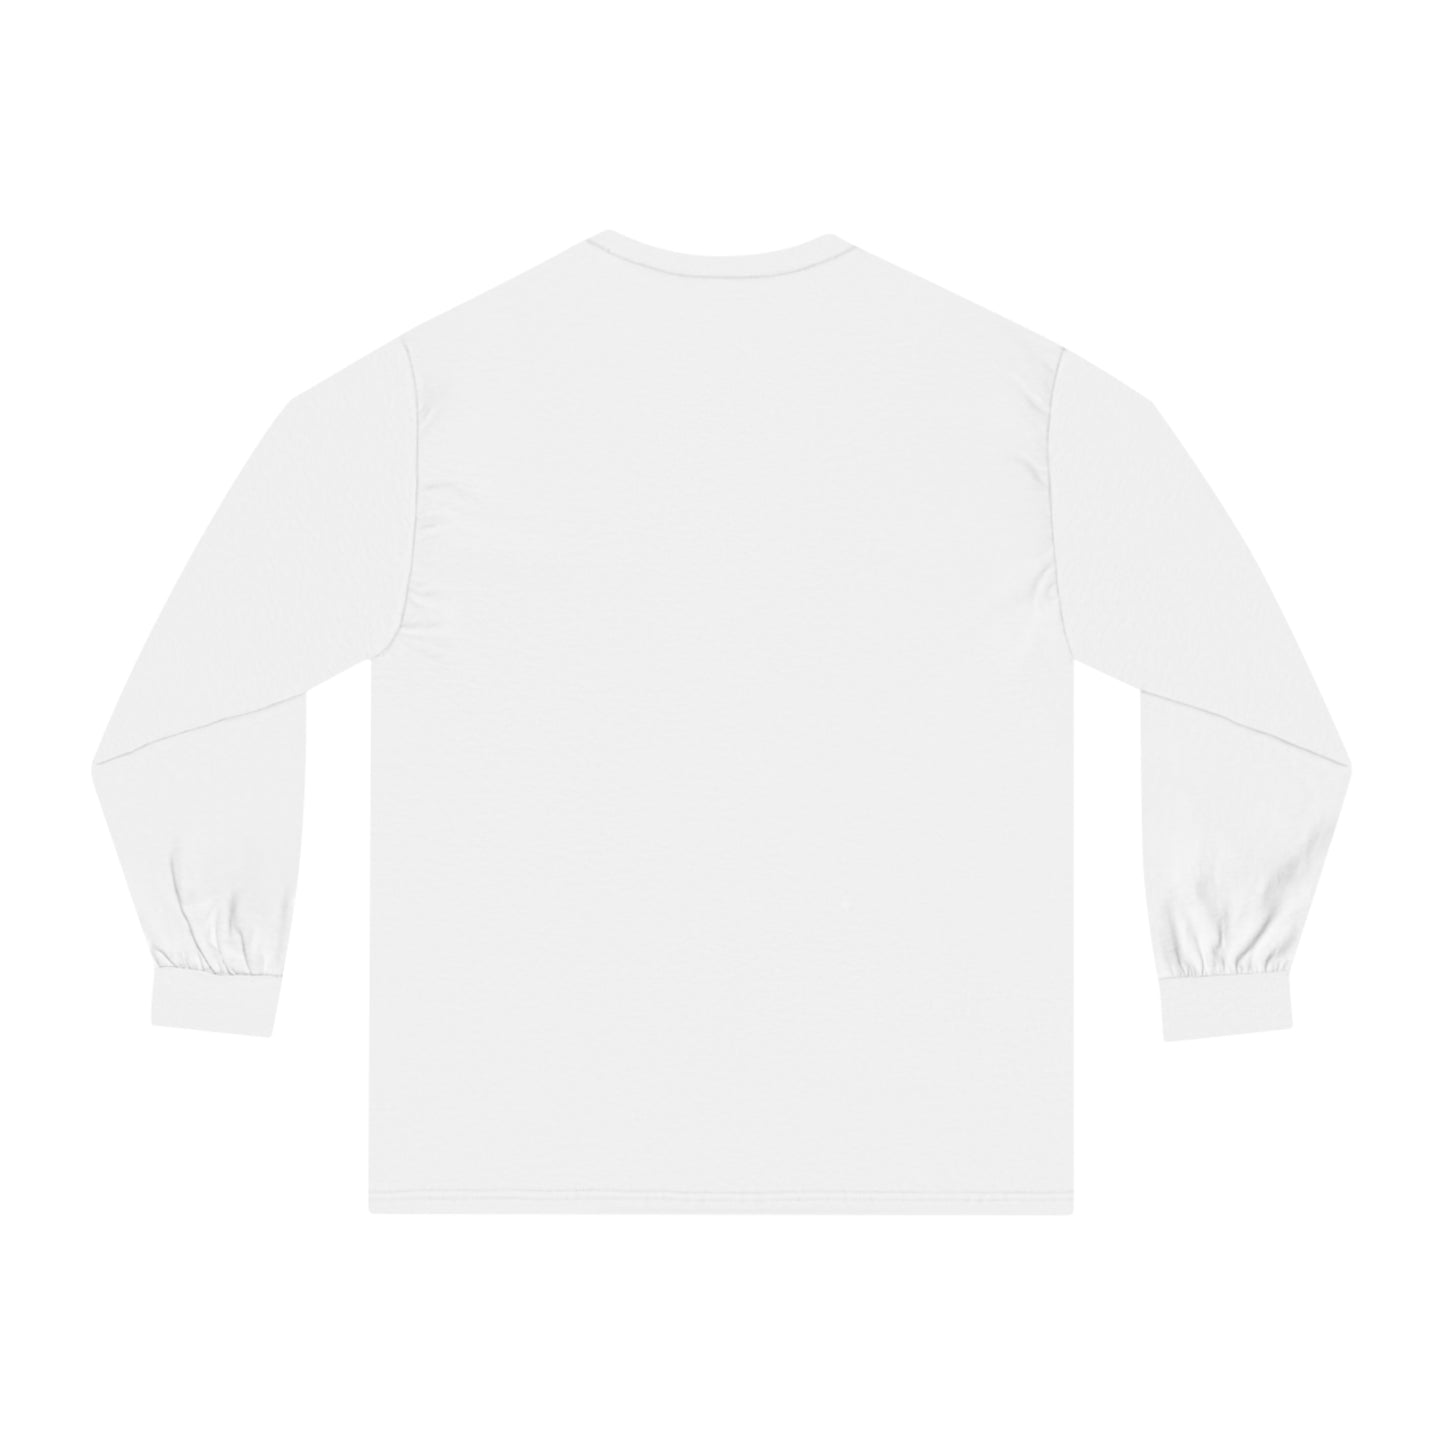 Eagle Nation - American Apparel Unisex Classic Long Sleeve T-Shirt